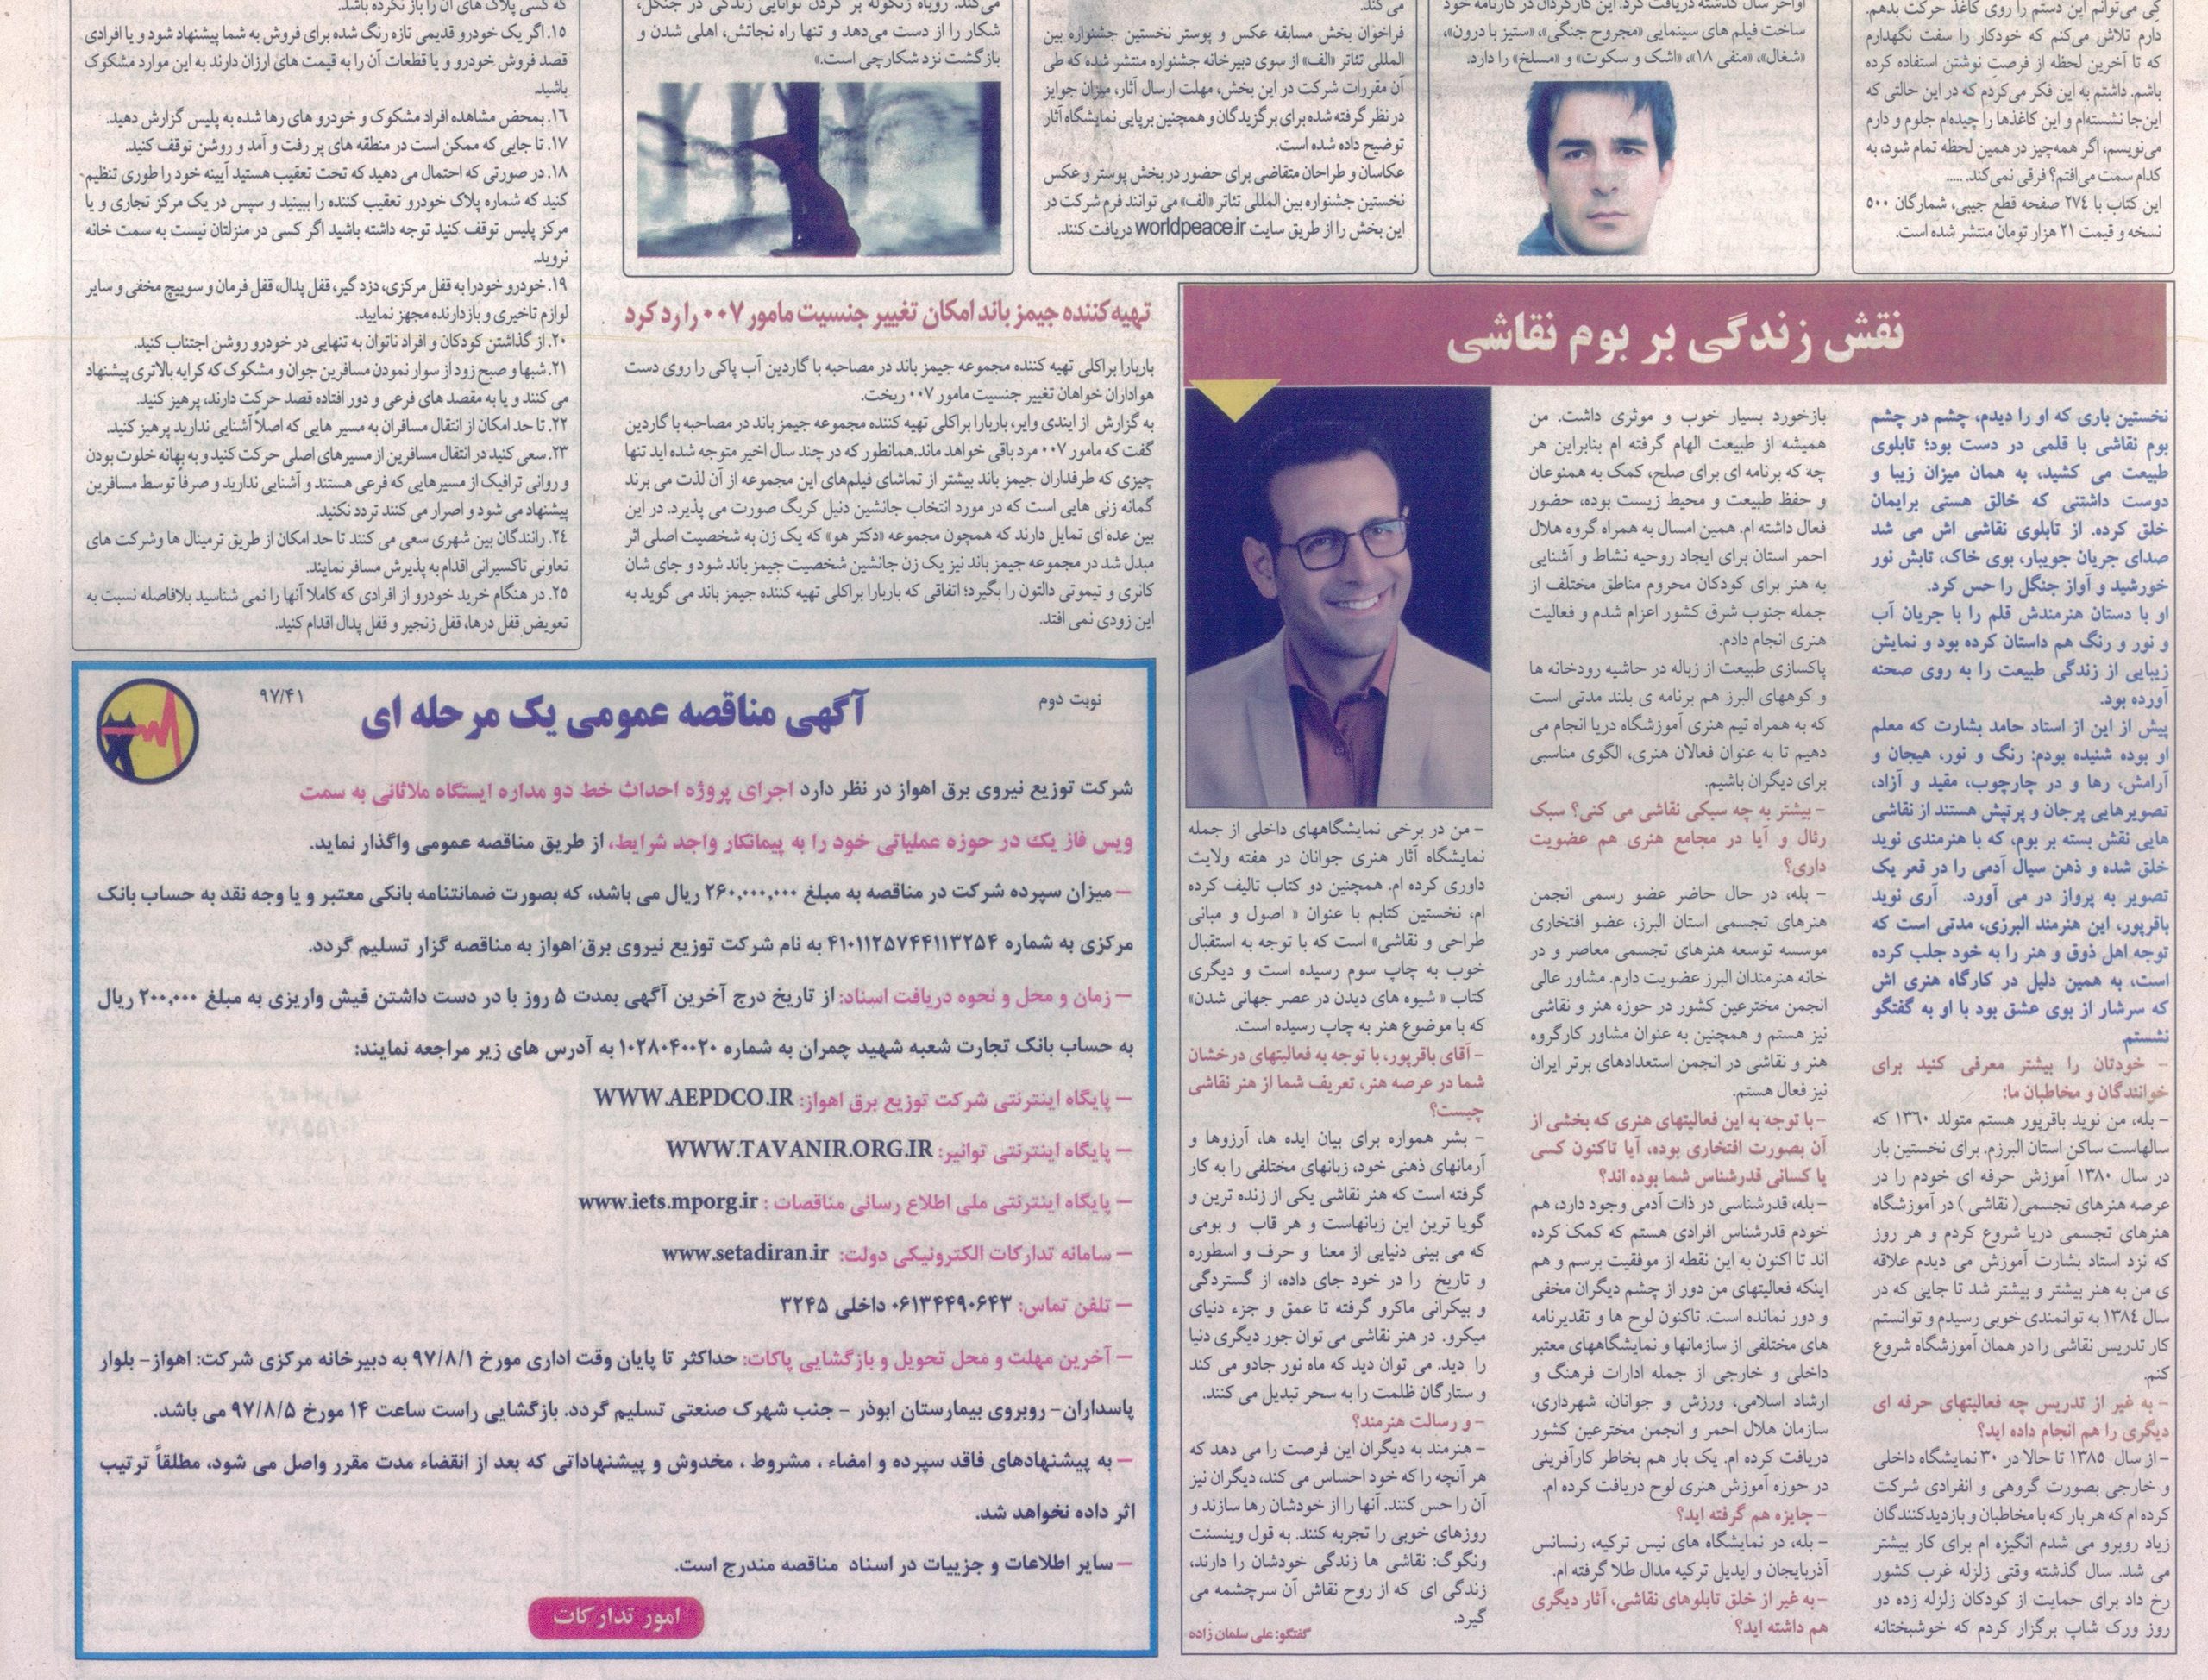 Interview with Zaman newspaper